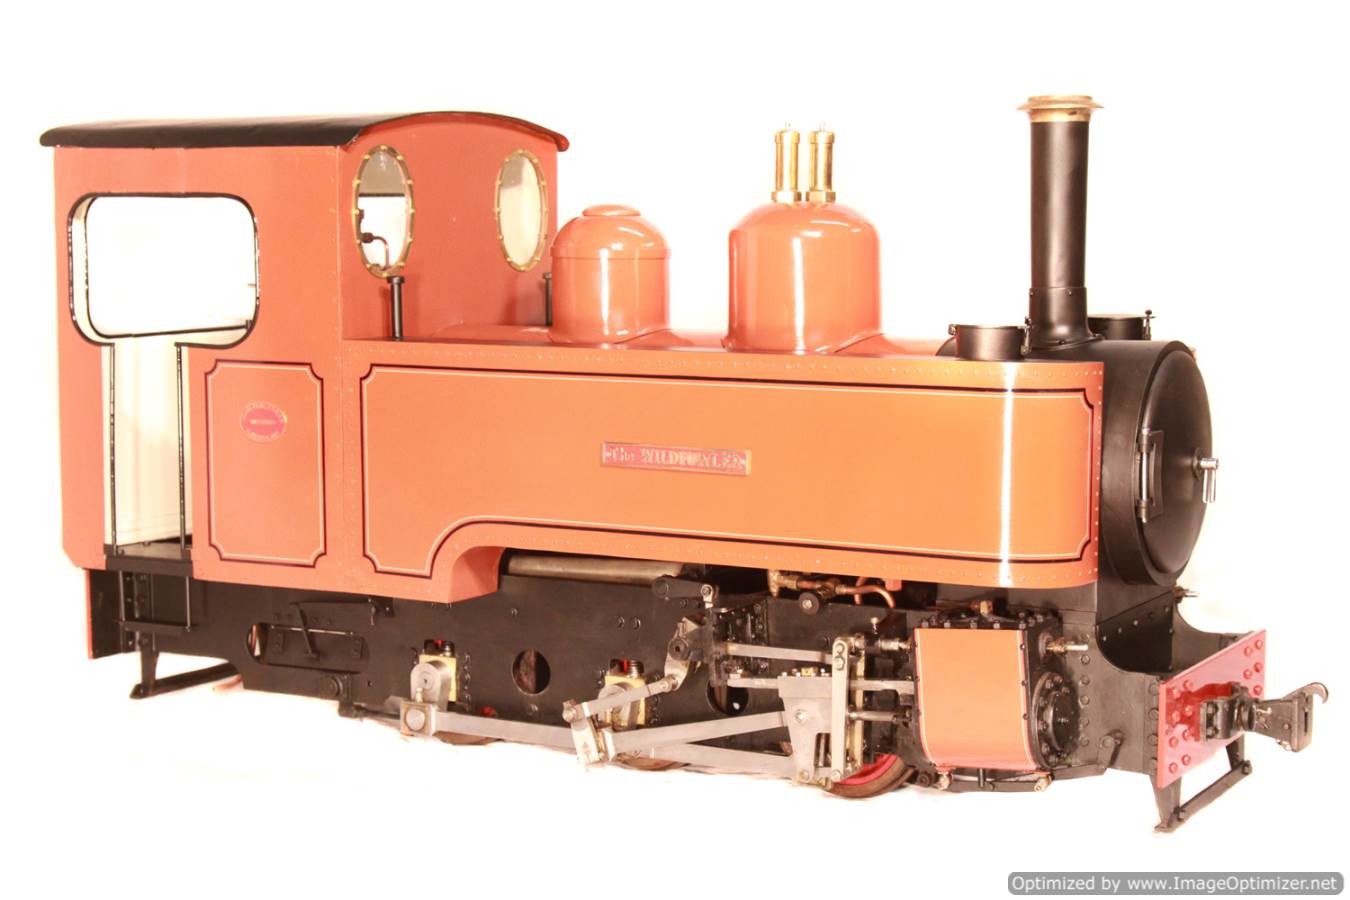 test 5 inch Gauge Fowler Live Steam Locomotive for sale 18 Optimized